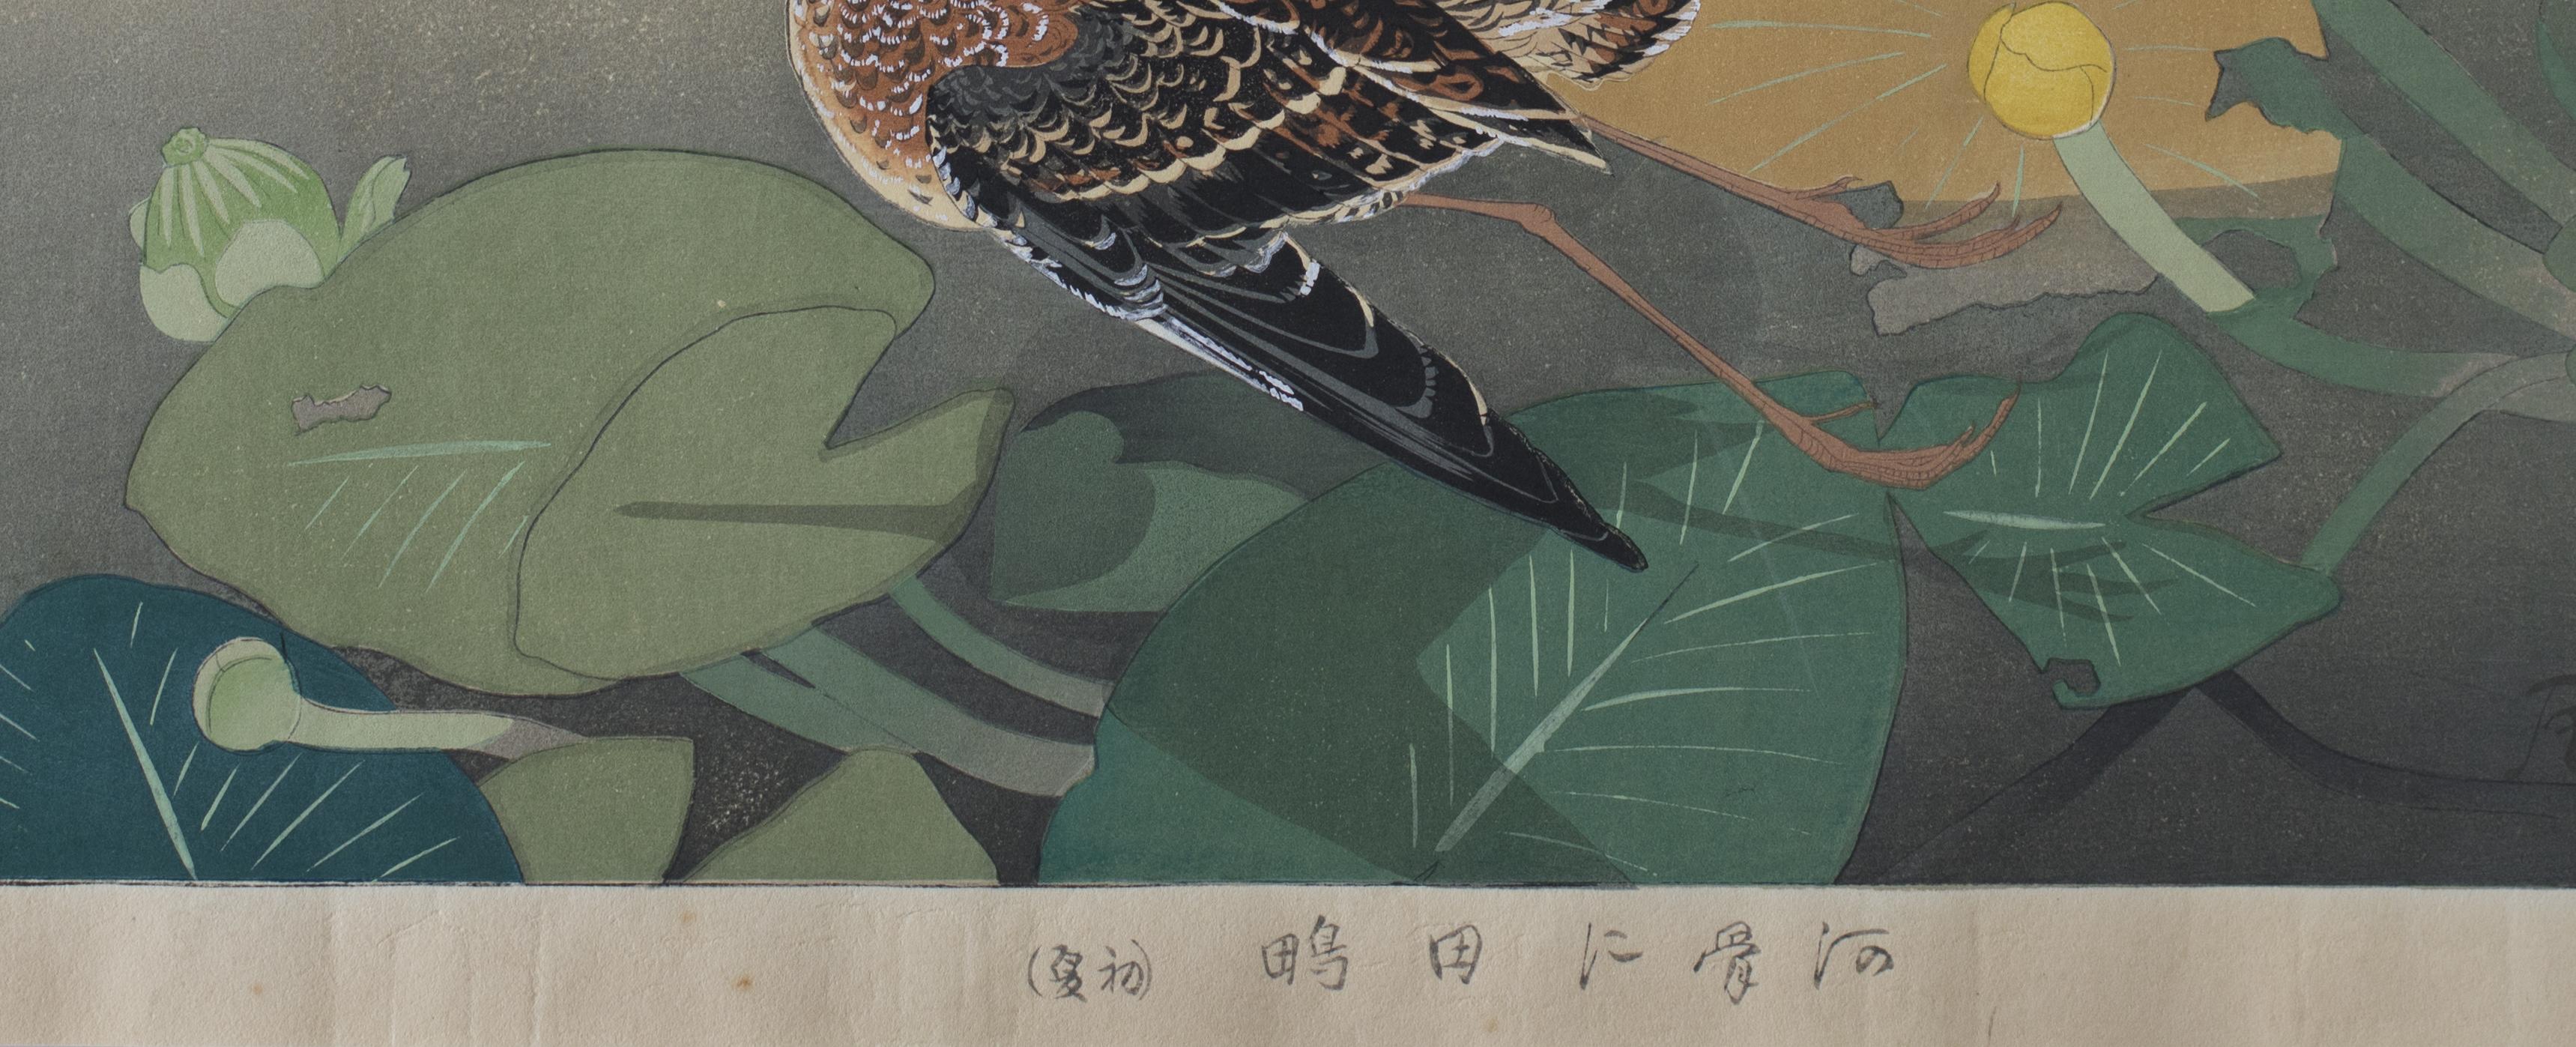 Sandpiper and Yellow Lotus Flower - Gray Animal Print by Tsuchiya Rakusan